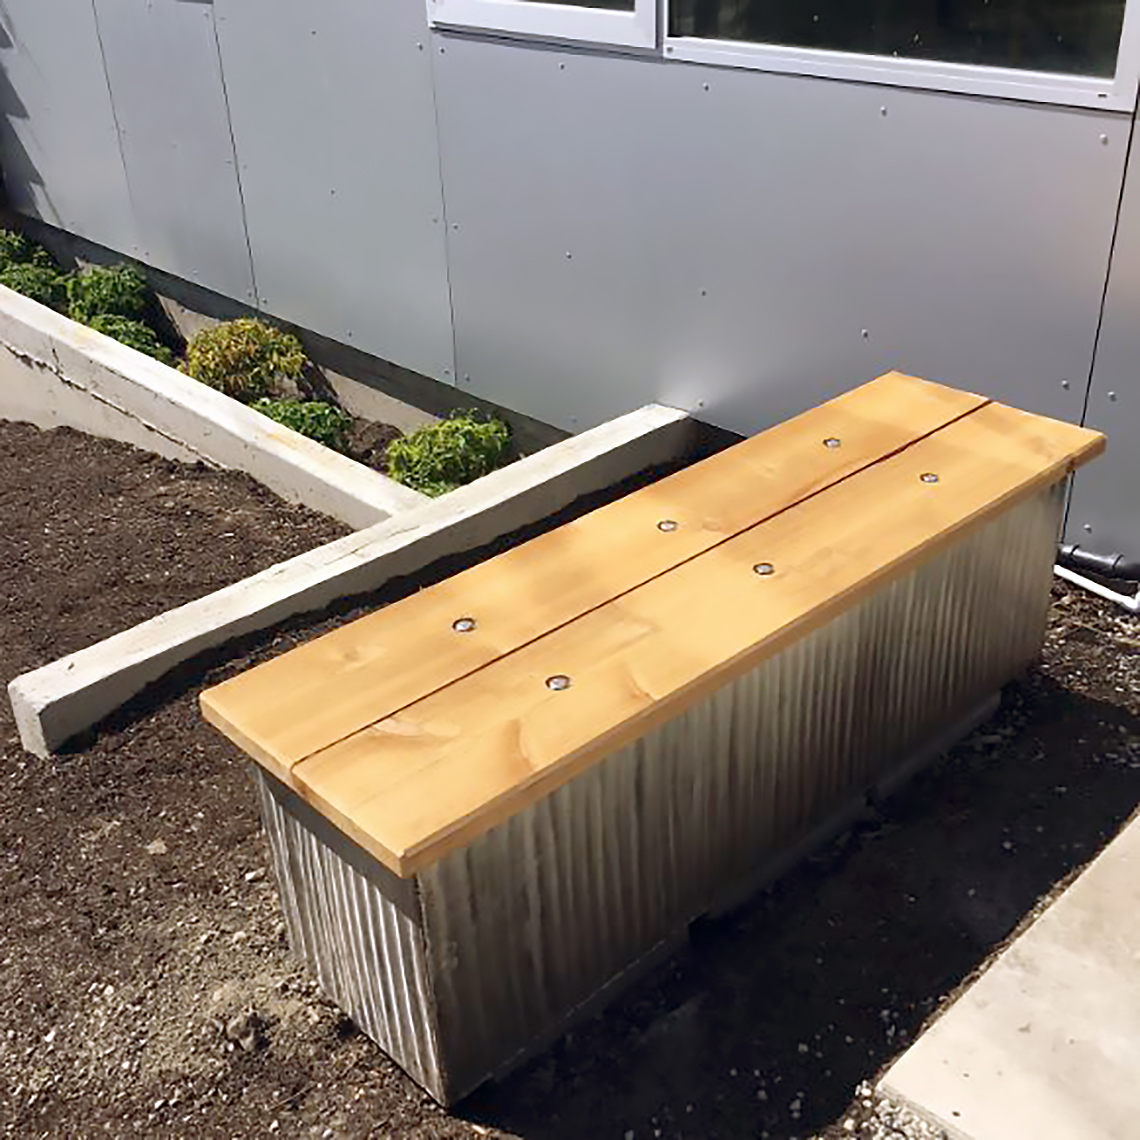 Build LLC 602 Flats reclaimed bench material